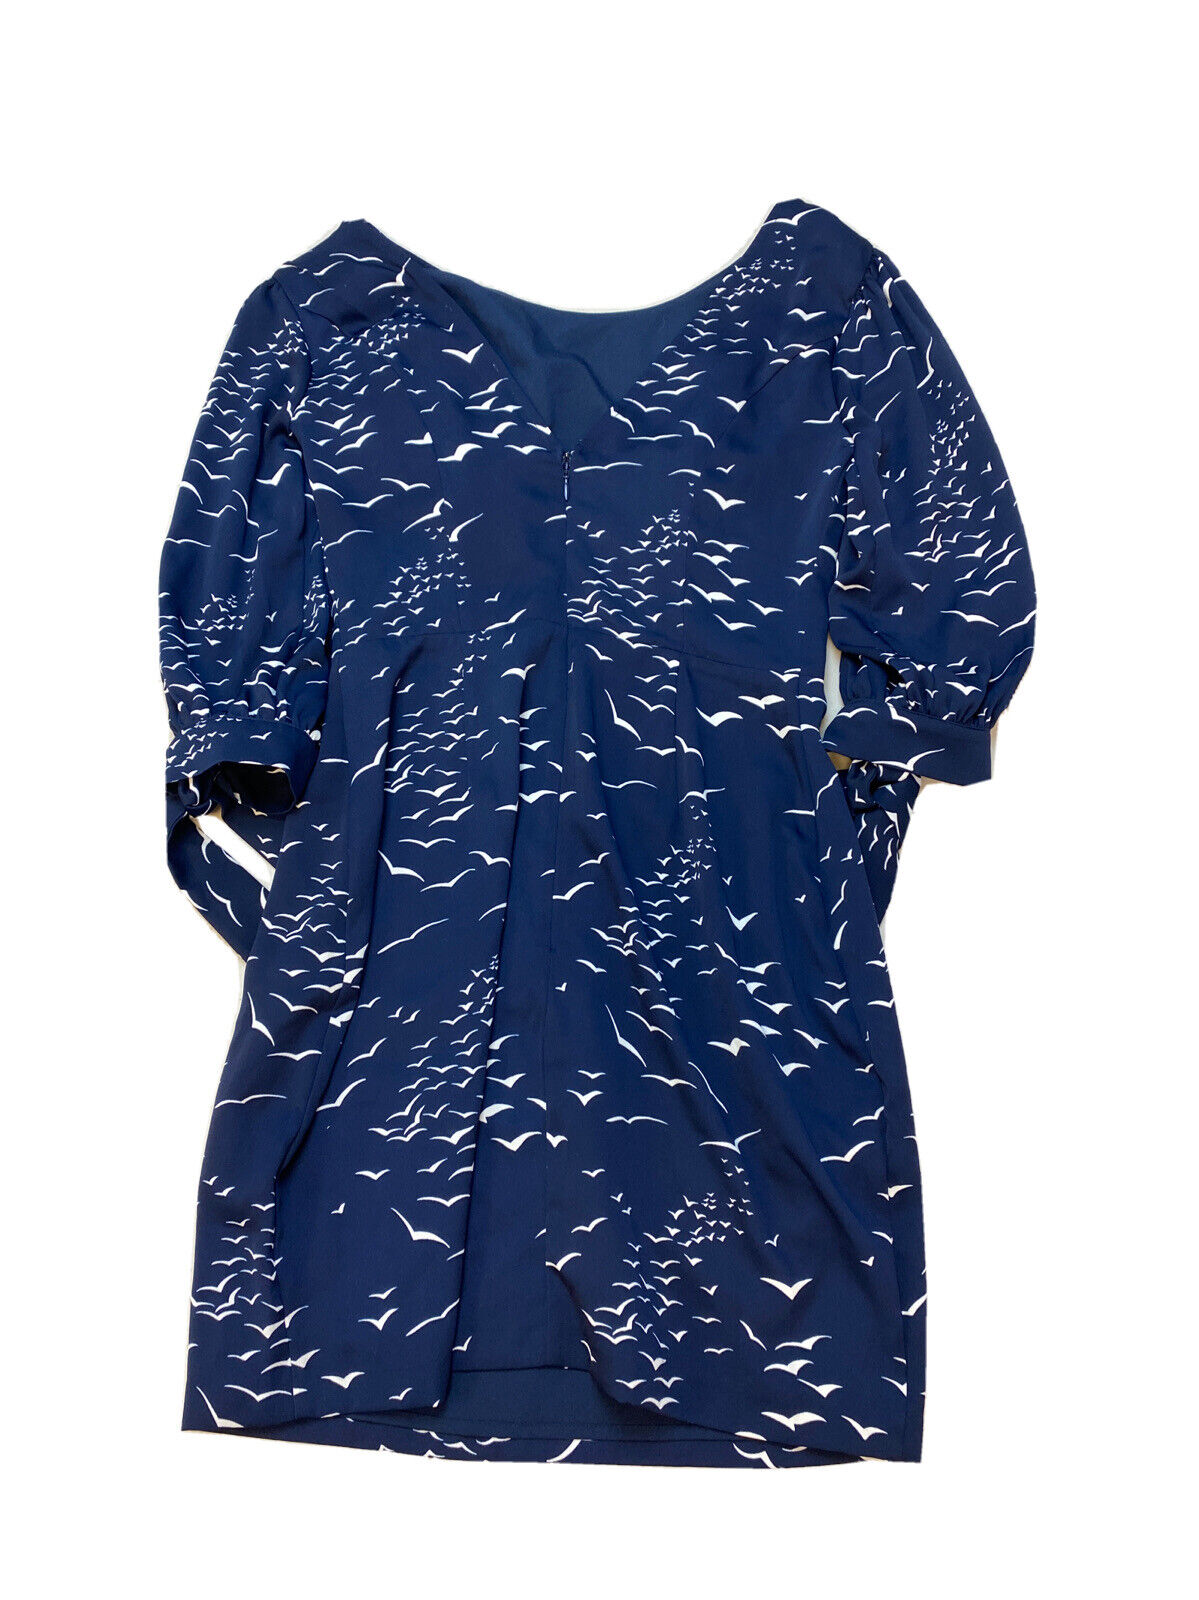 BCBG Generation Women's Blue Bird Print Tie Sleeve A-Line Dress Sz 2